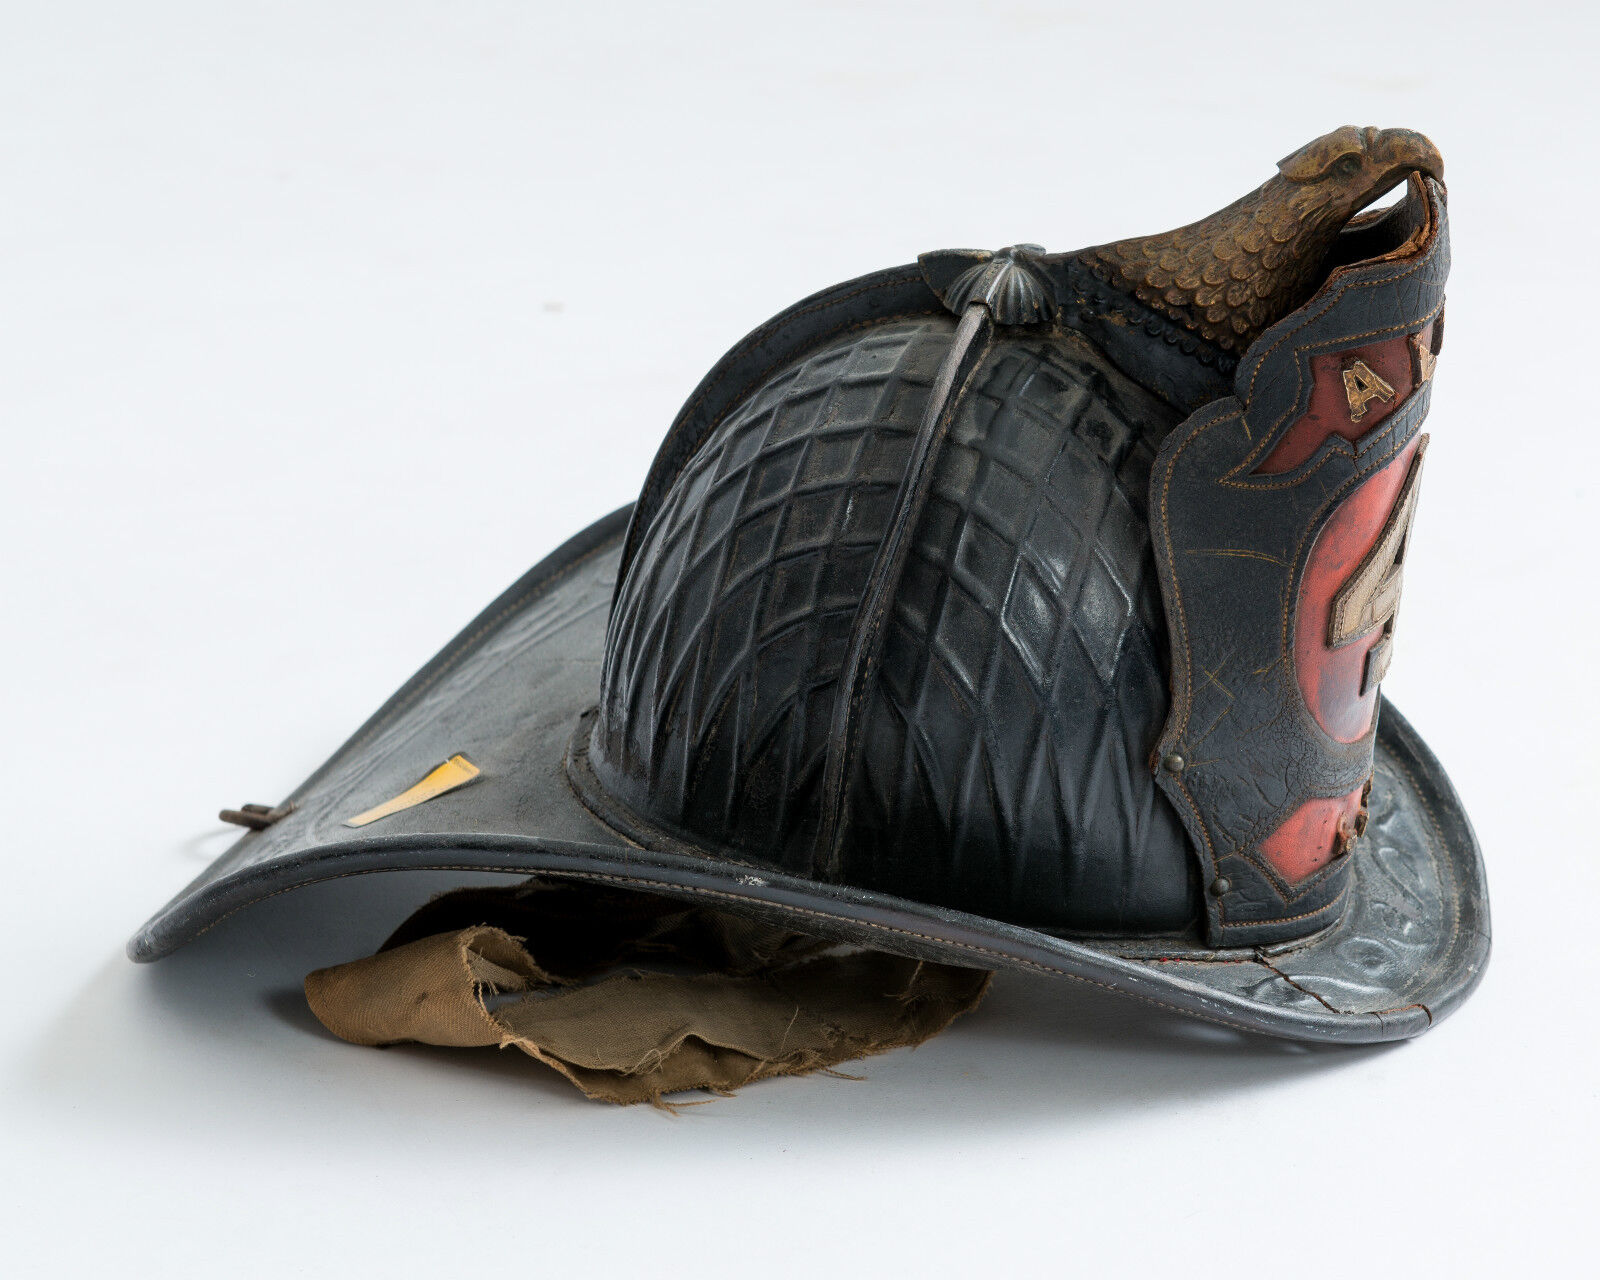 Historic Alton, Illinois Leather Billed Firemen's Helmet from the 1860's